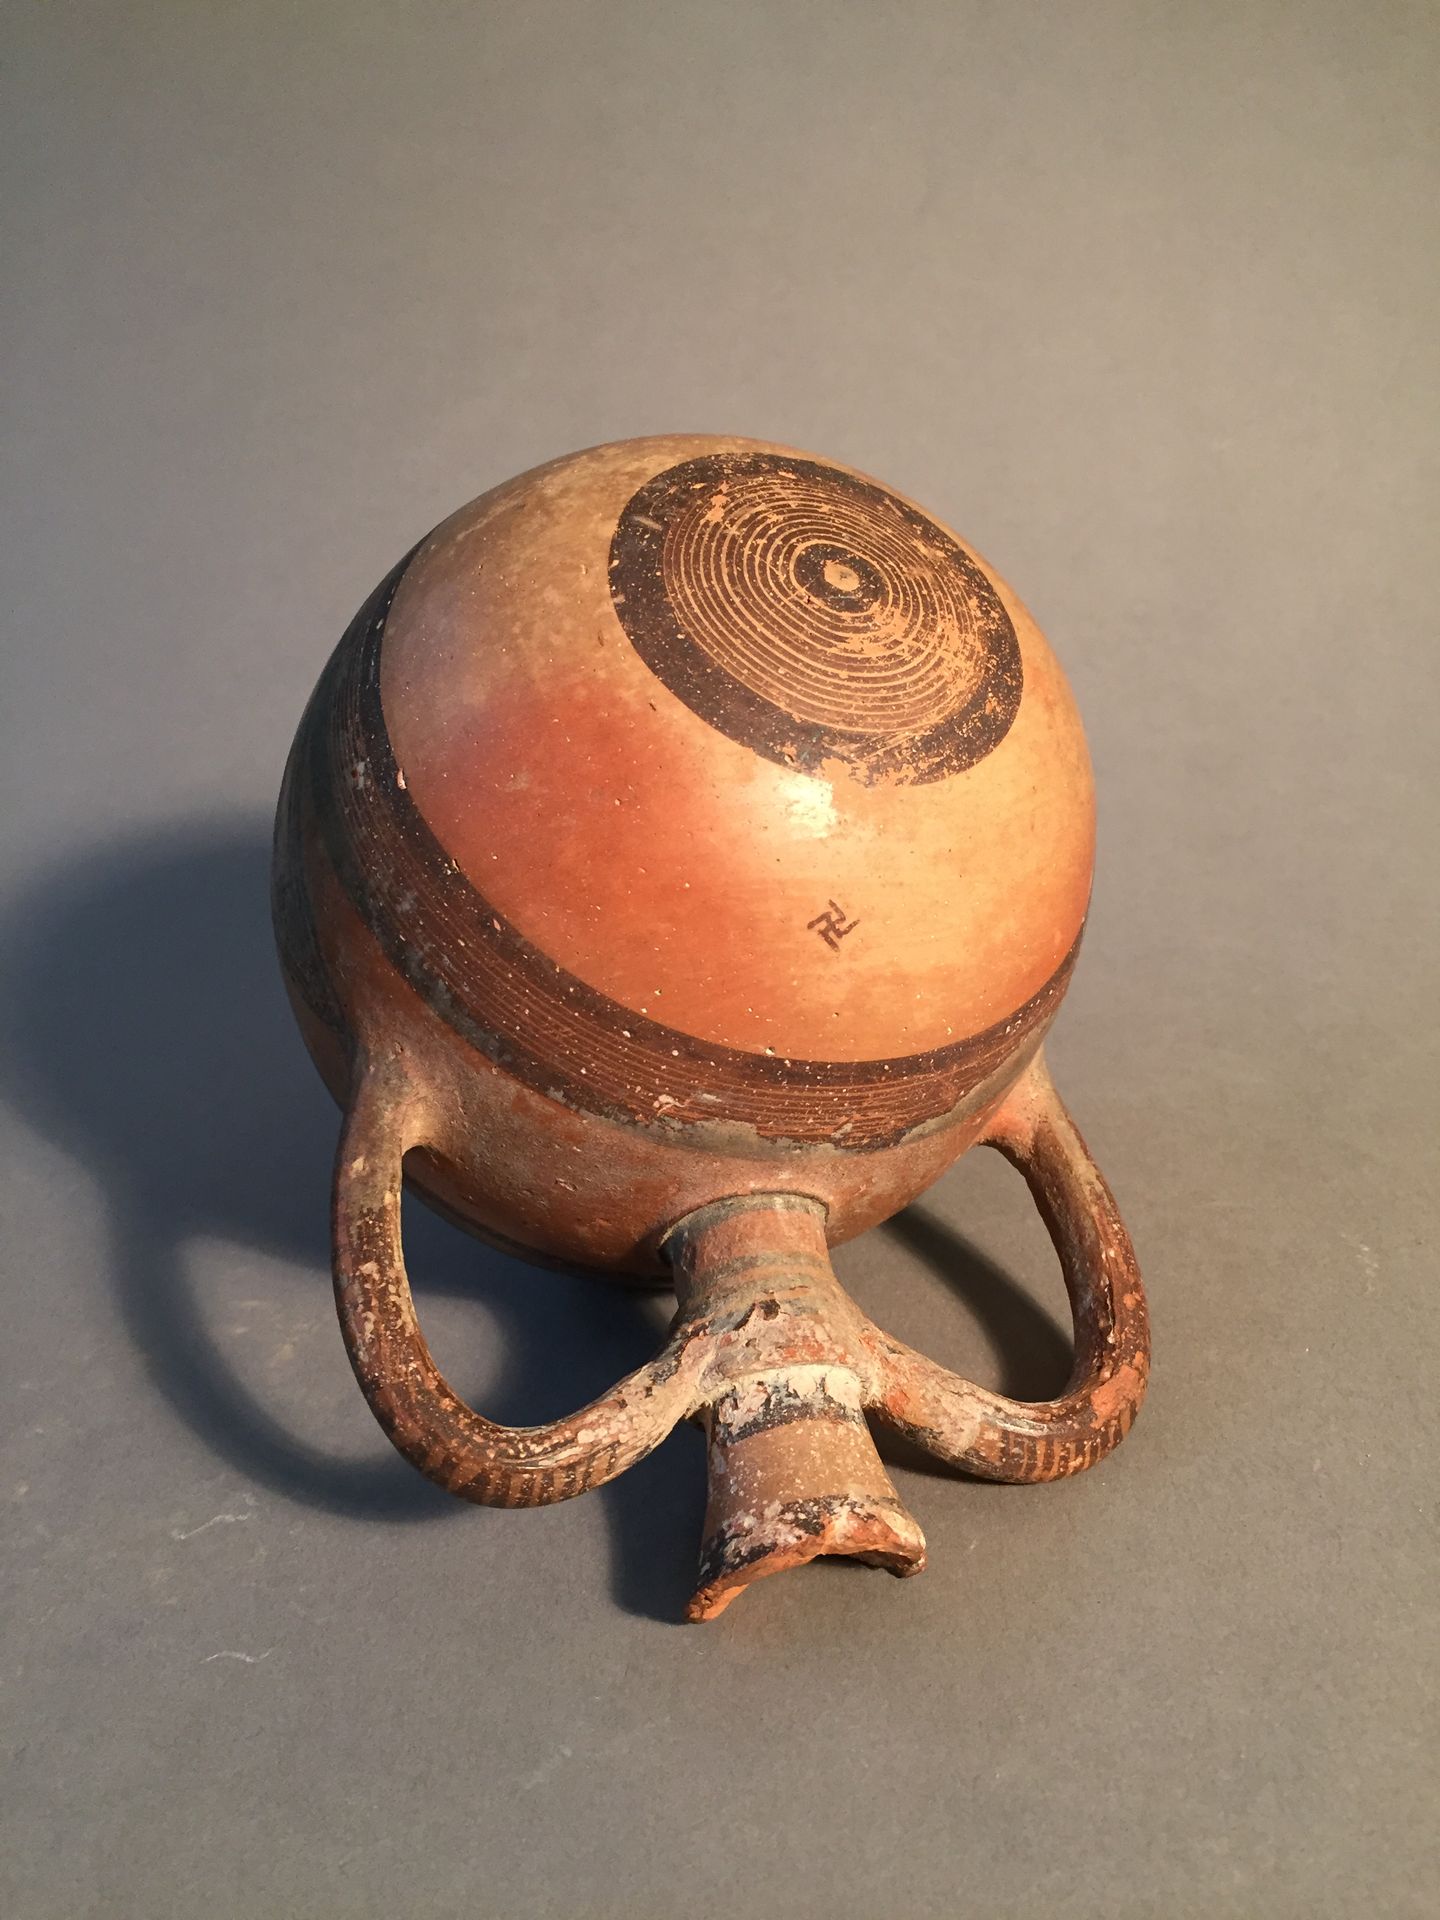 Null 一个卵形的烧瓶，有两个把手，上面有同心圆和雪花纹的几何装饰。粘土和颜料。差距。塞浦路斯；太古时期，约公元前750-600年。高15厘米。